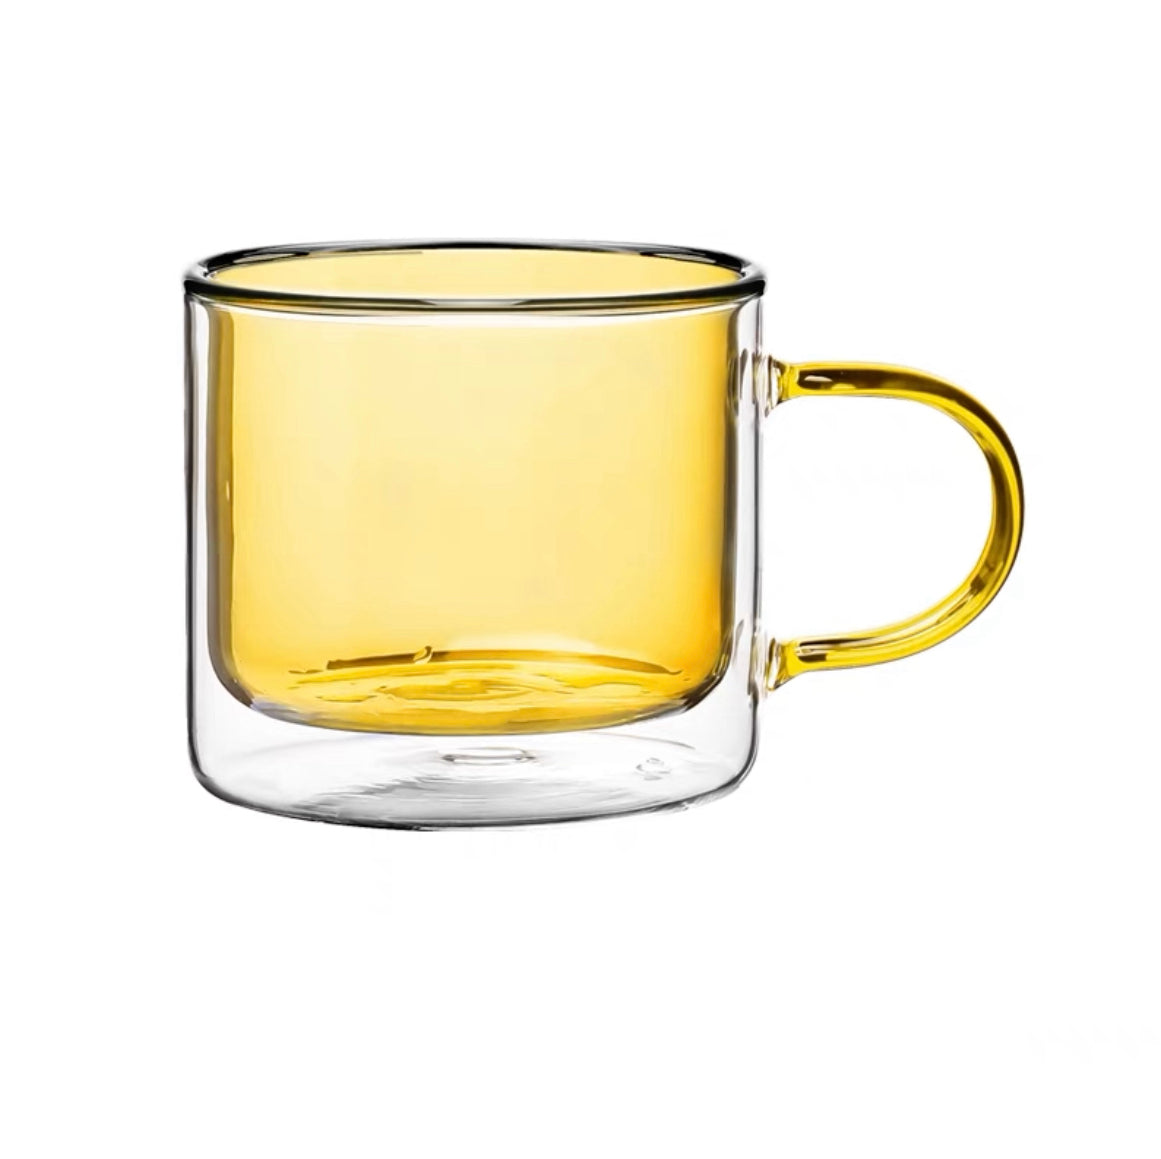 Sorreto Double-walled Glass Mug